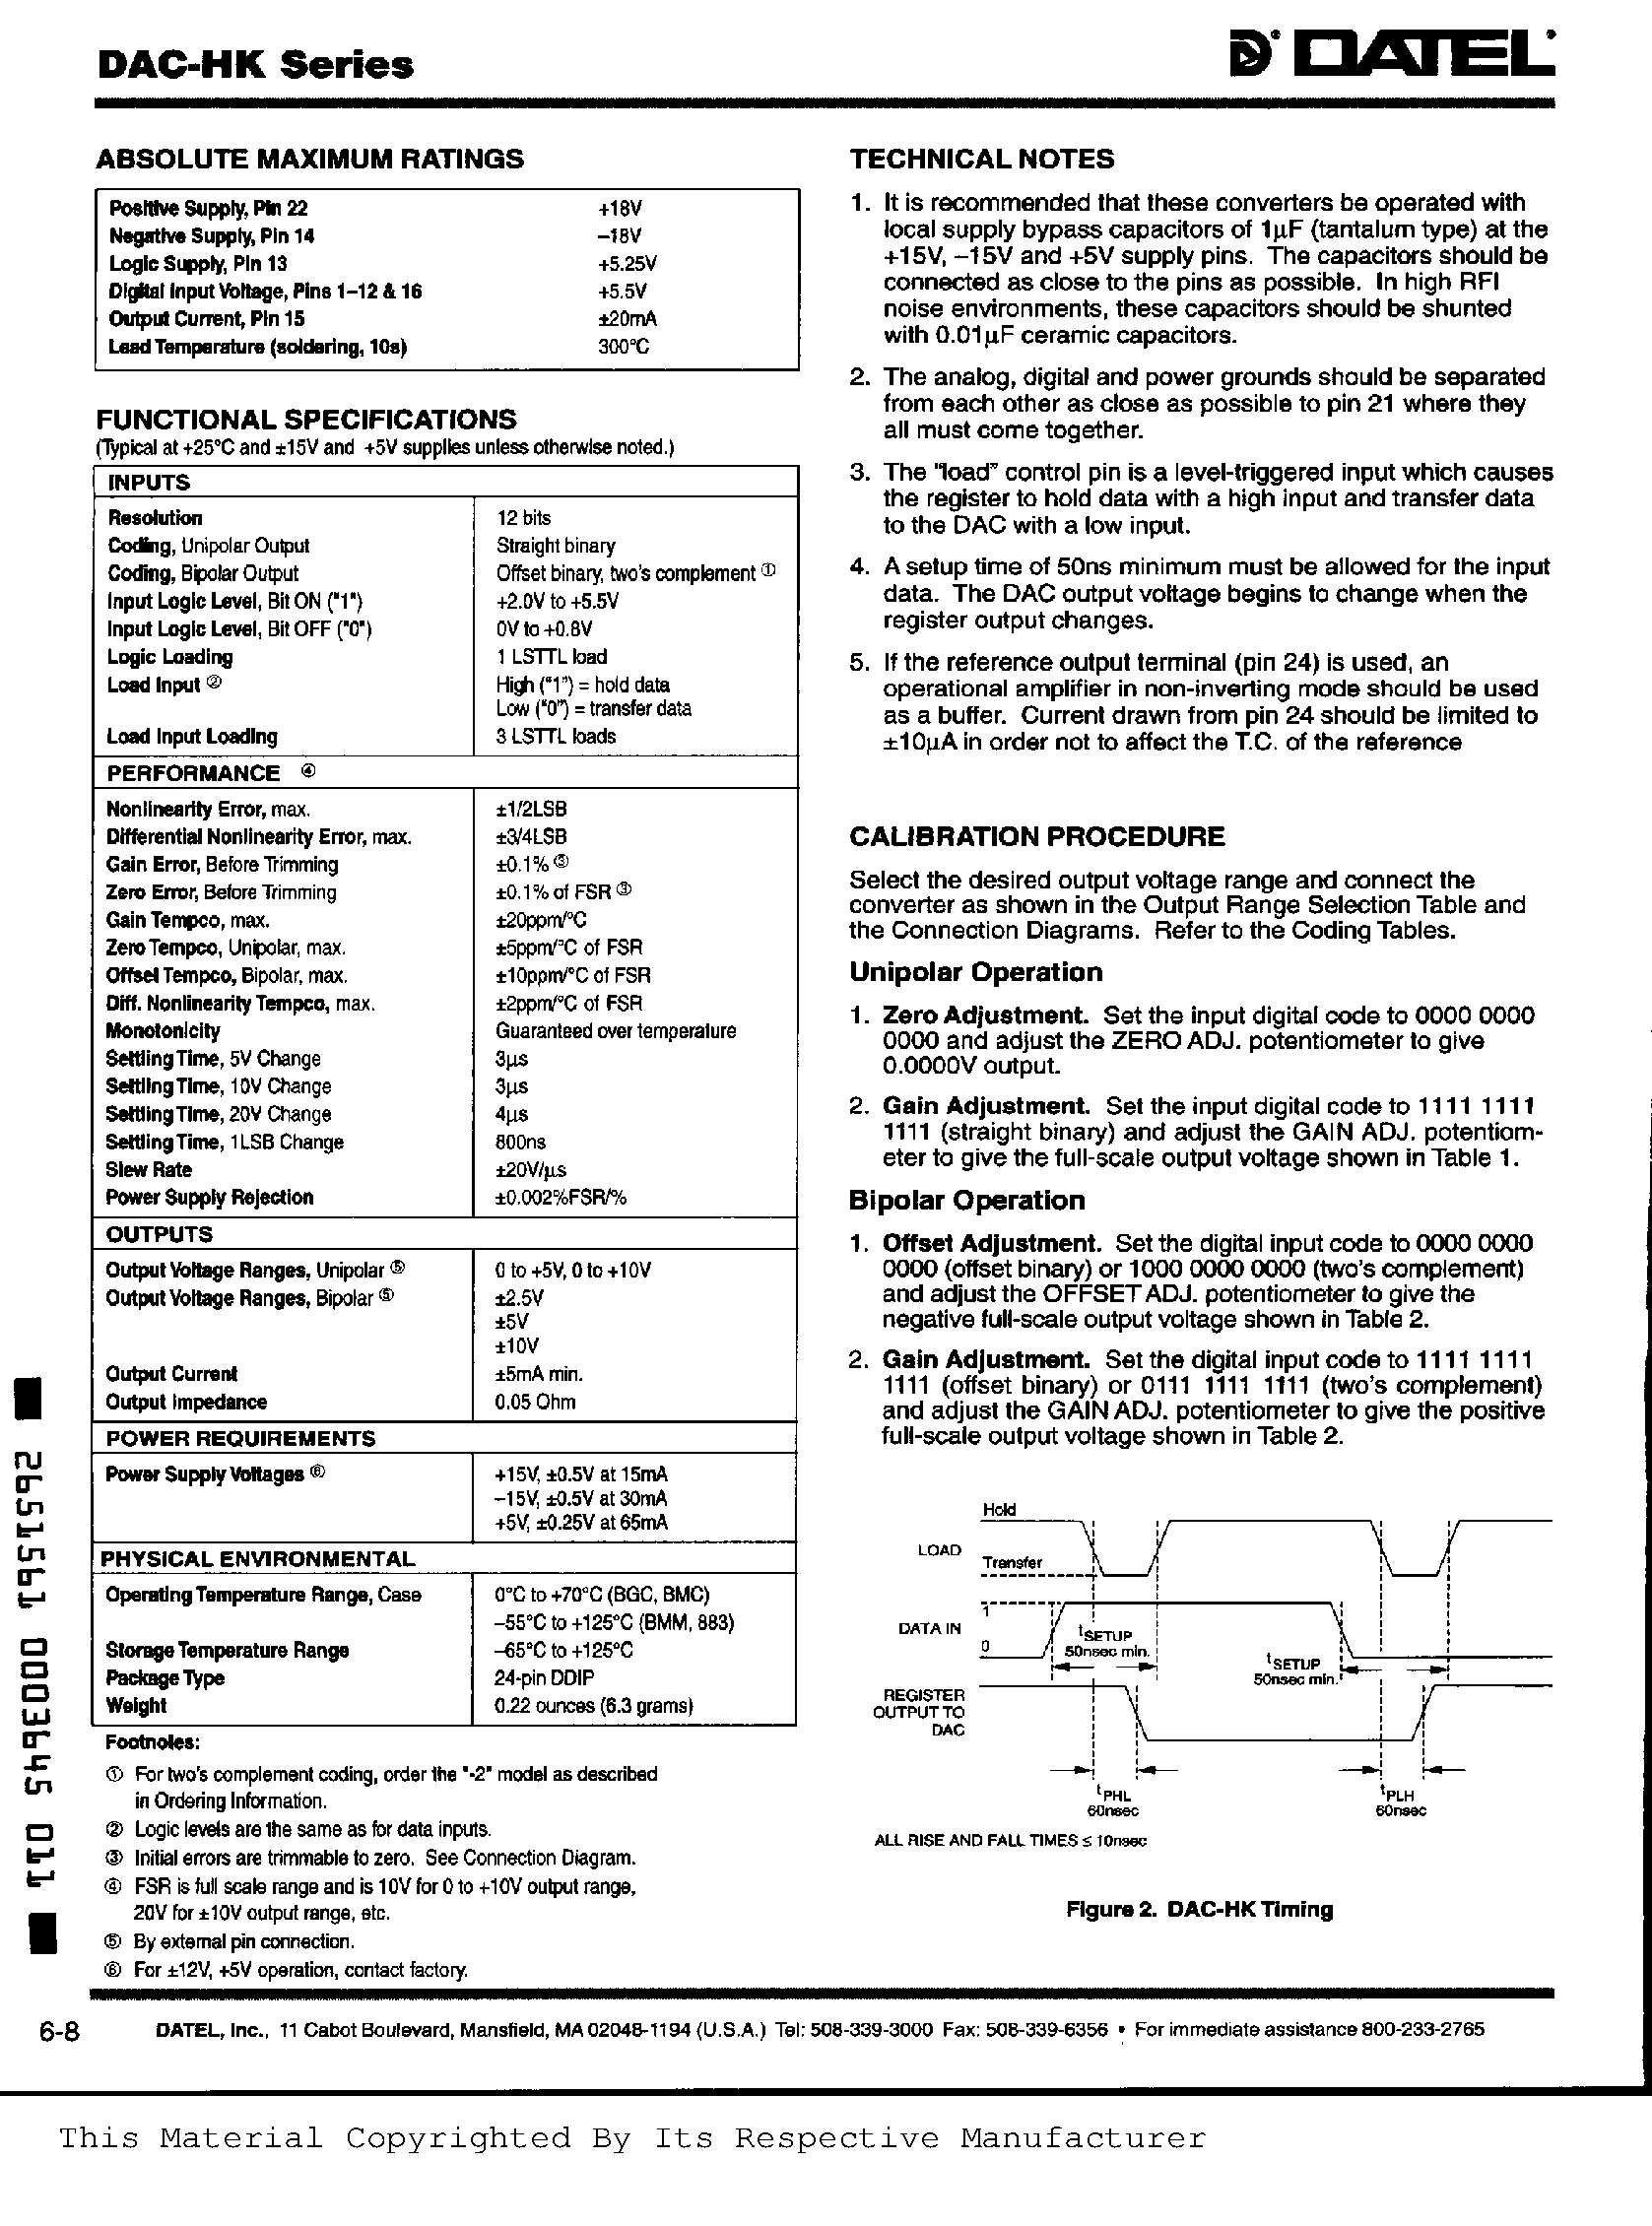 Datasheet DAC-HK12BMM-2 - HIGH PERFORMANCE 12 BIT DAC WITH INPUT REGISTERS page 2